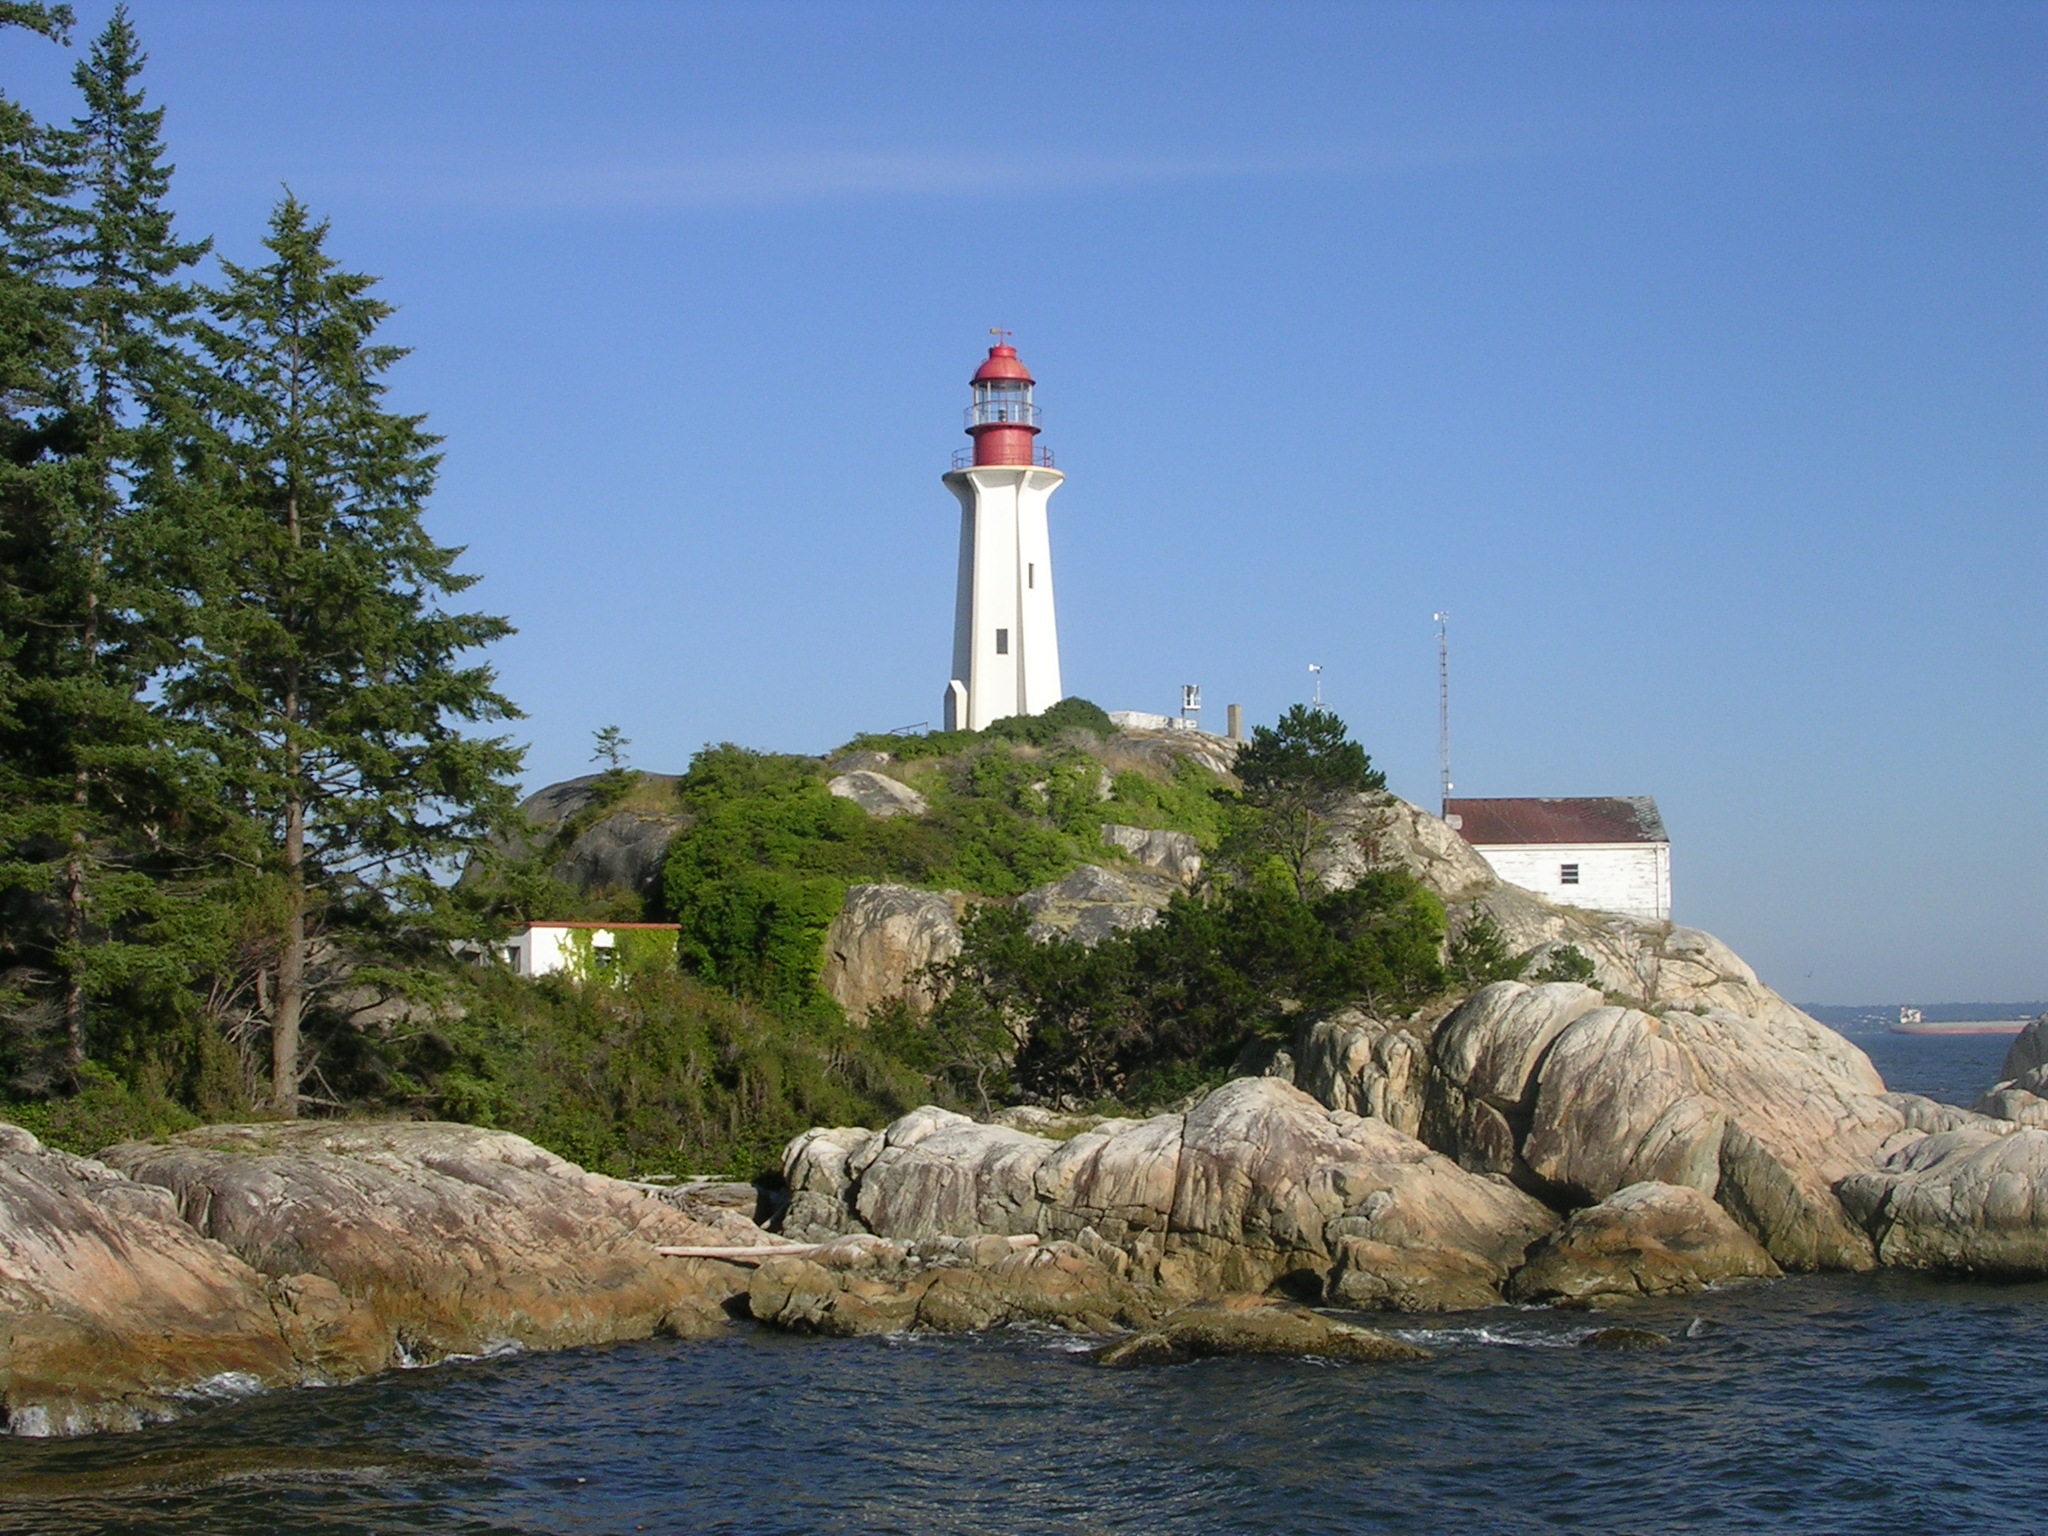 File:Lighthouse Lighthouse Park.JPG - Wikimedia Commons